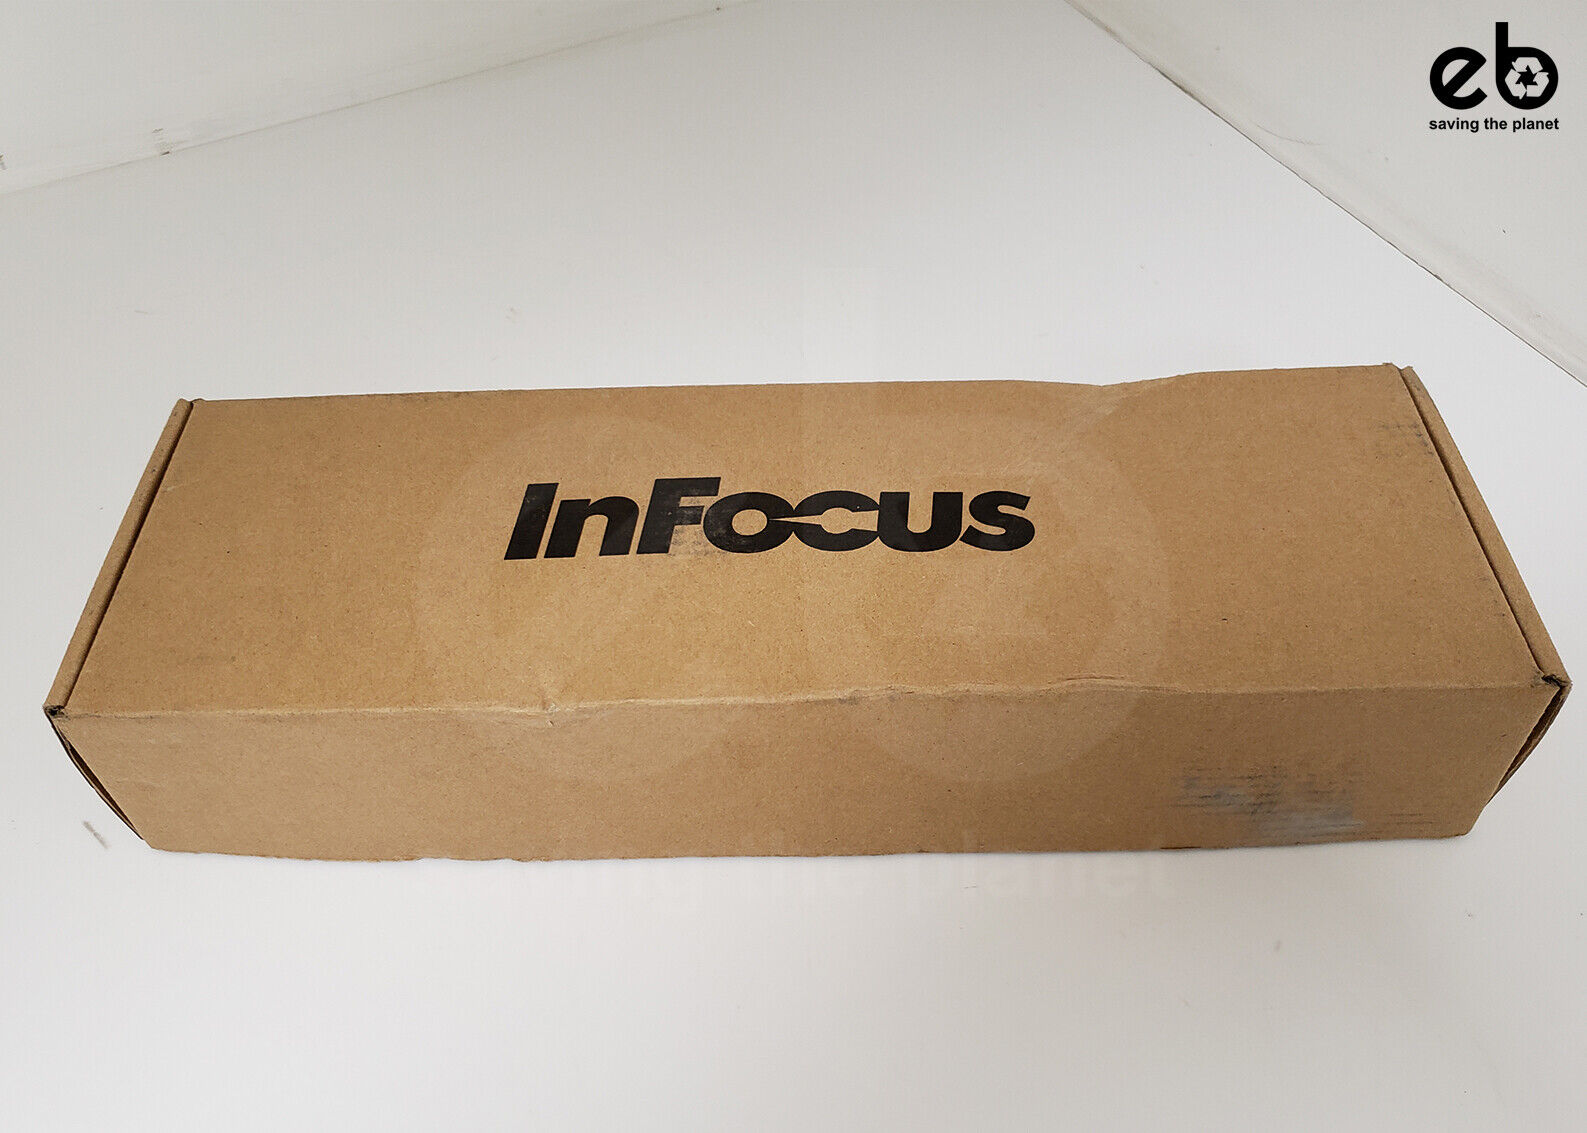 InFocus HW-Camera-2 USB 3.0 720p HD Conferencing Camera  NEW IN BOX